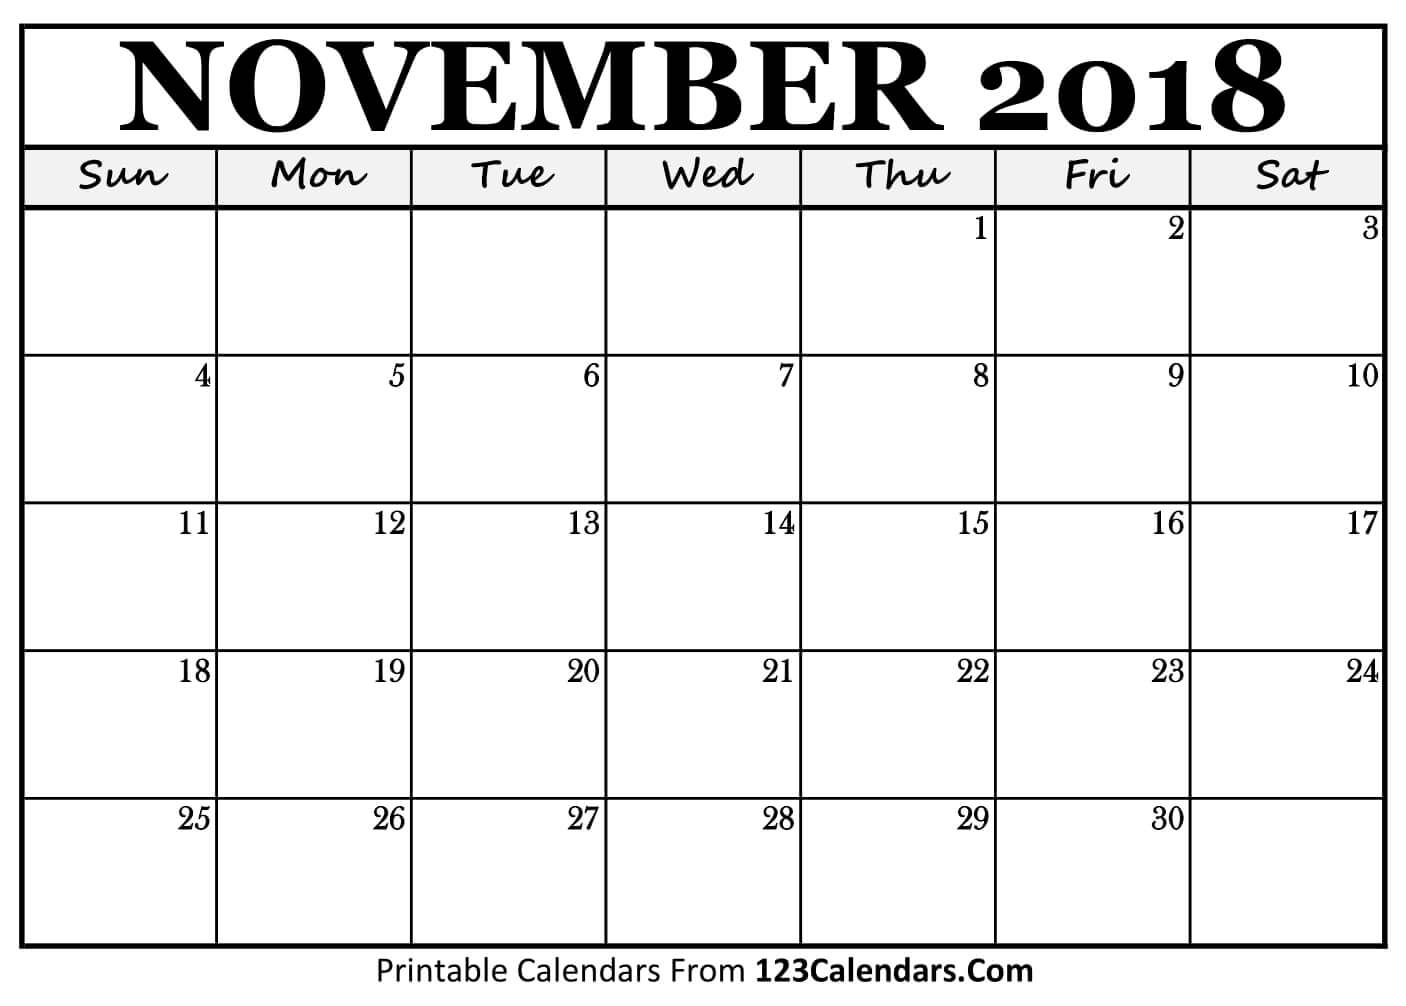 kalender-november-2018-malaysia-november-calendar-2018-malaysia